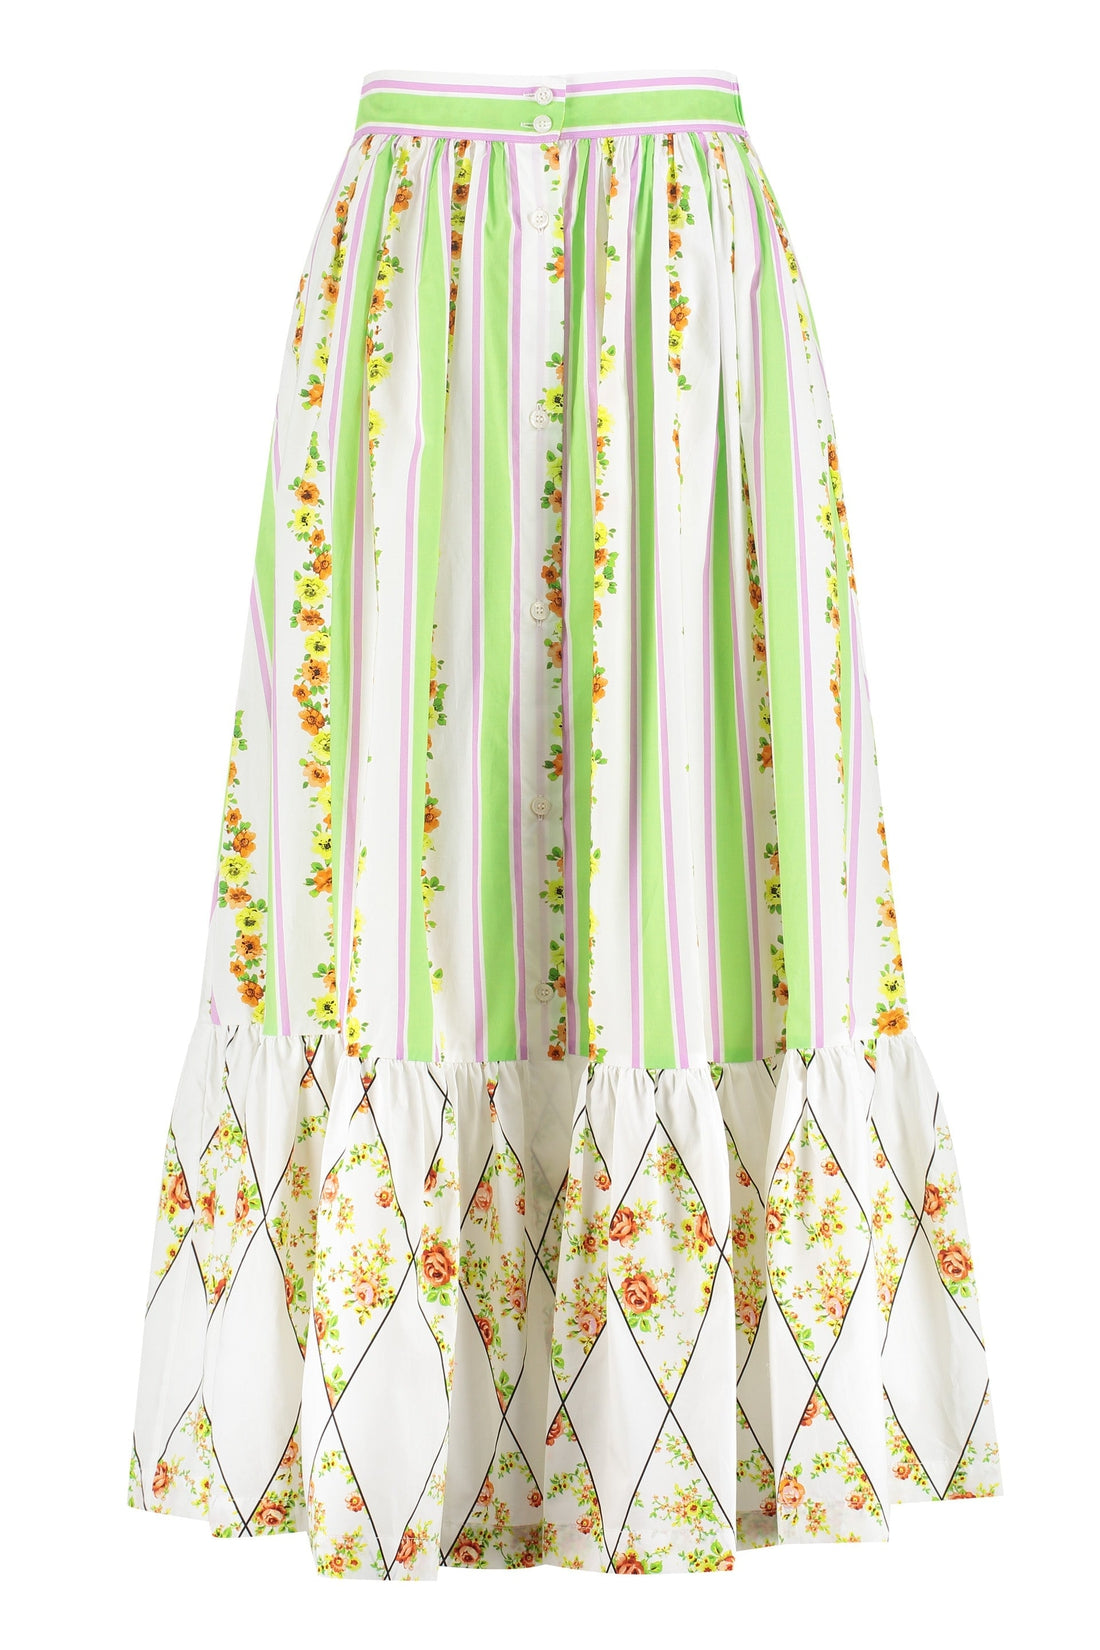 MSGM-OUTLET-SALE-Printed cotton skirt-ARCHIVIST